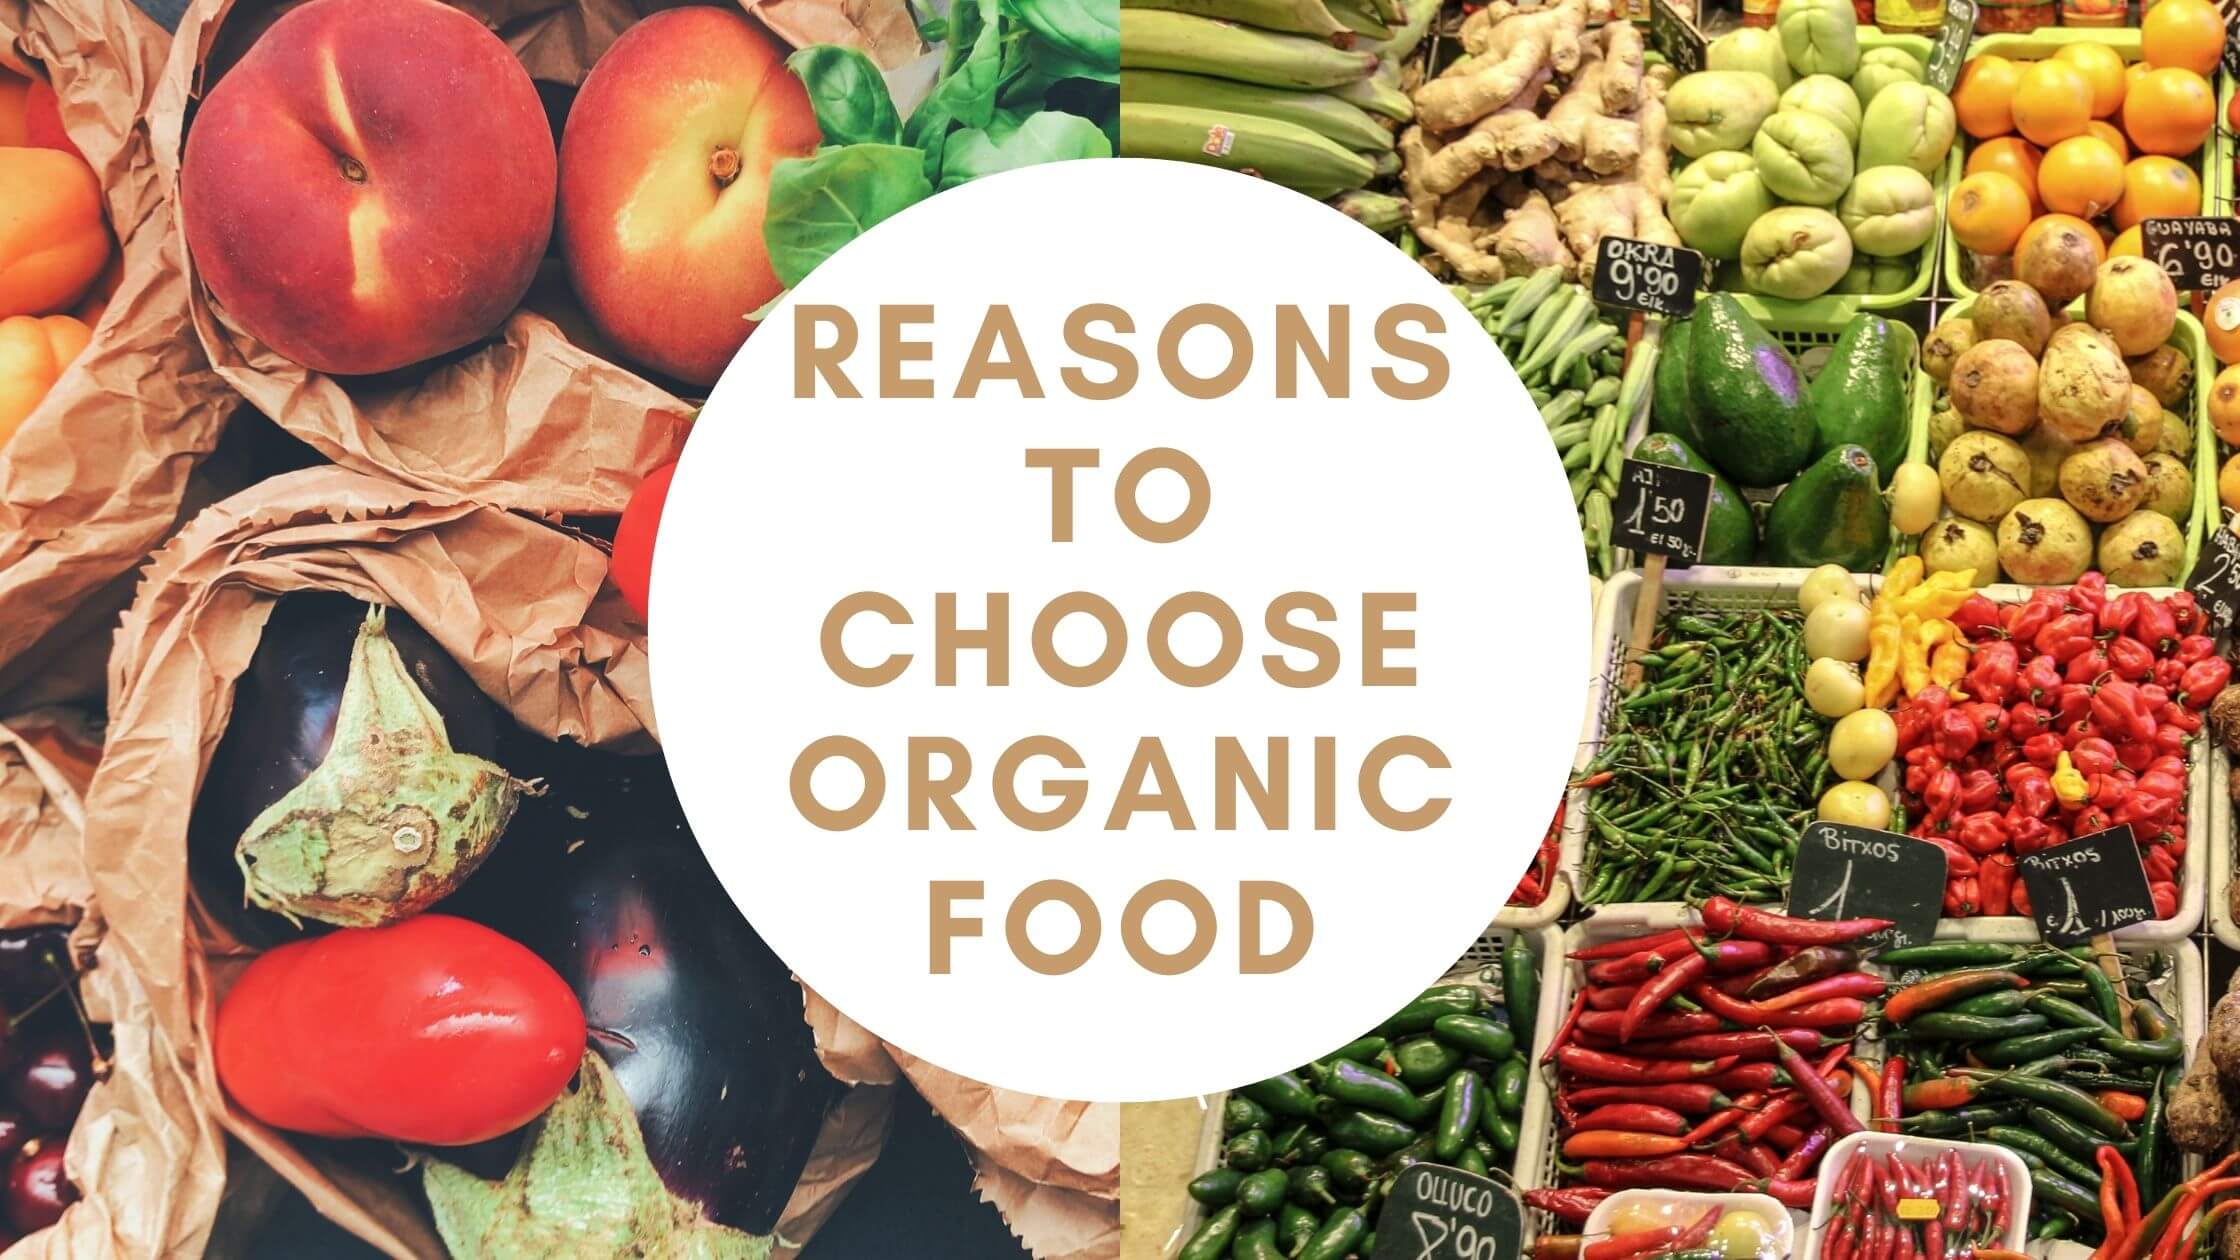 Reasons to choose organic food